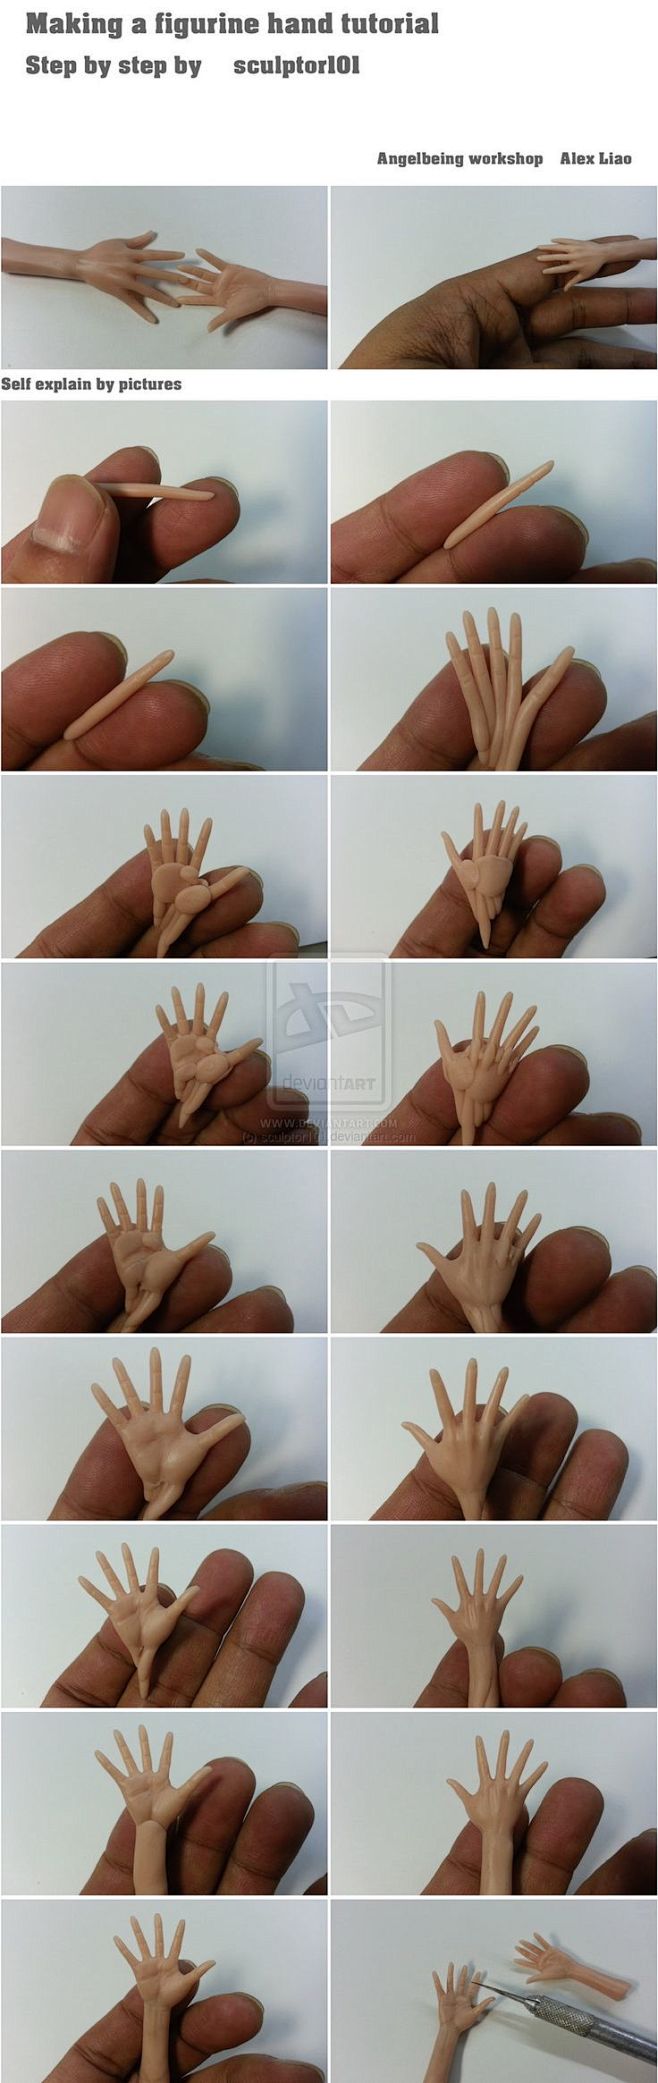 Hand tutorial